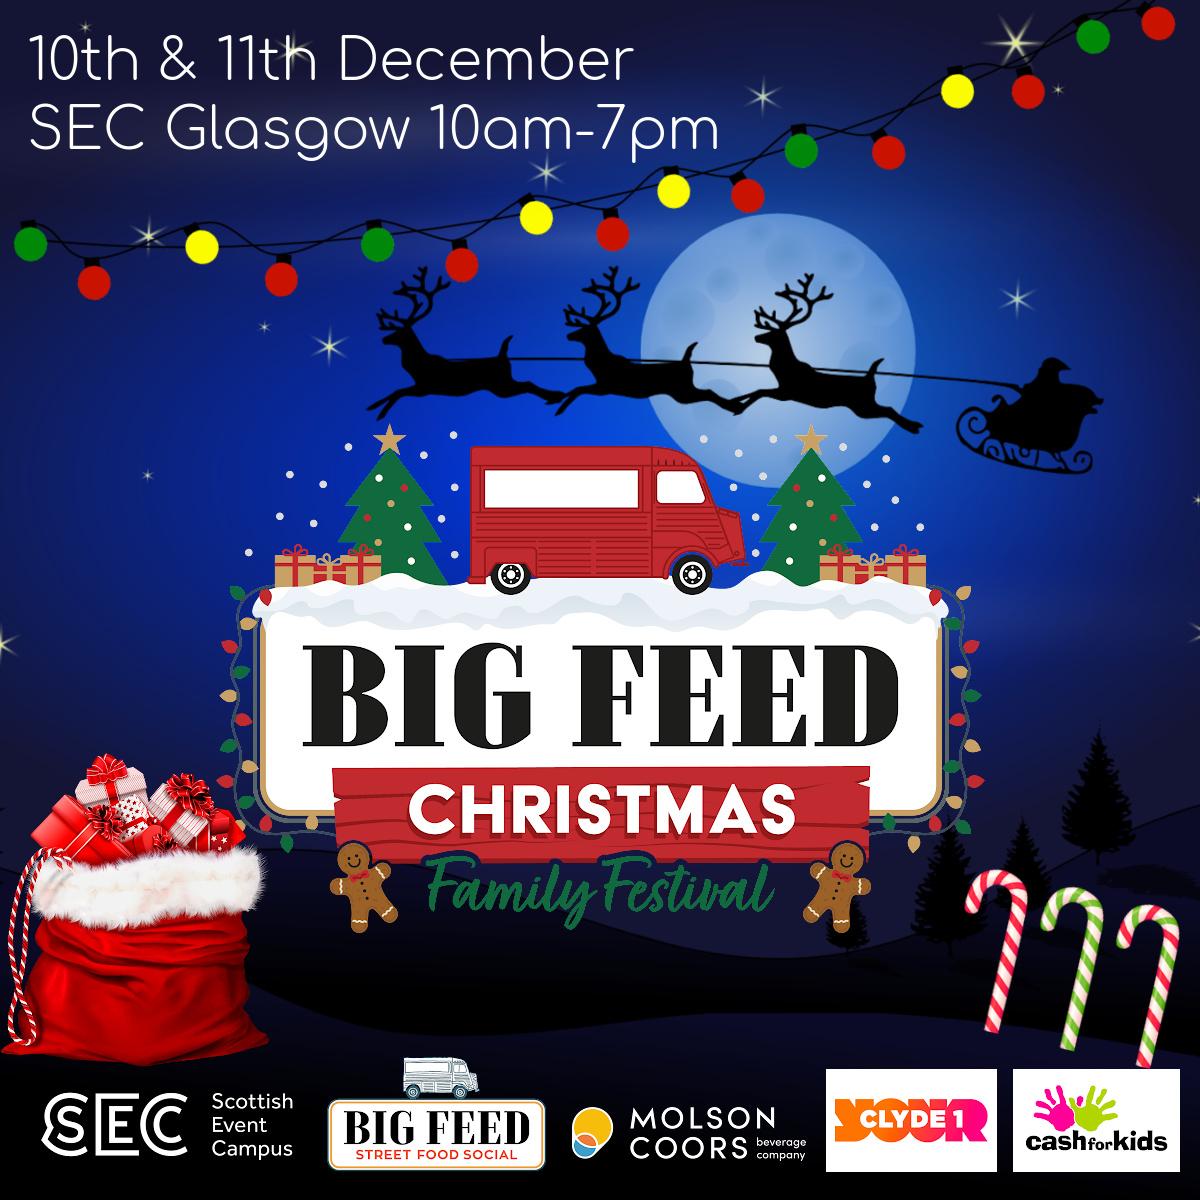 Big Feed Christmas Family Festival at the SEC Glasgow